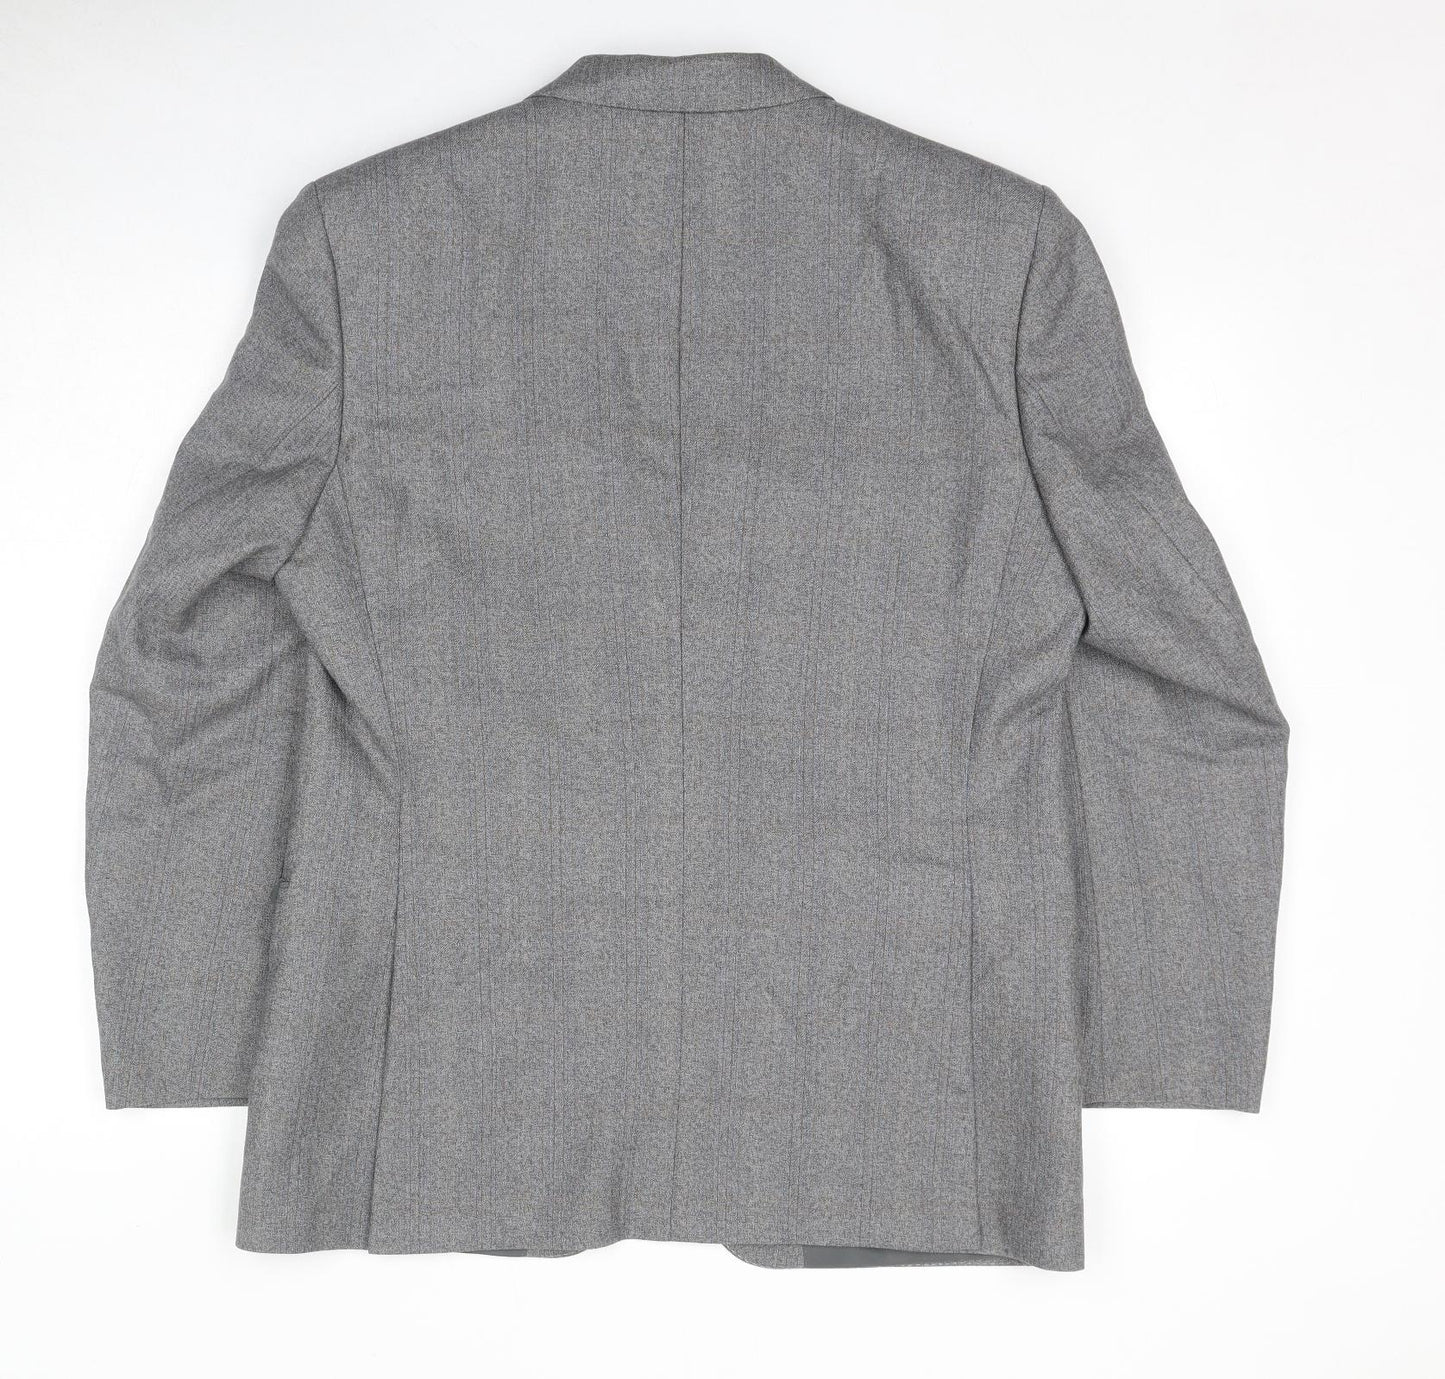 Centaur Mens Grey Wool Jacket Suit Jacket Size 40 Regular